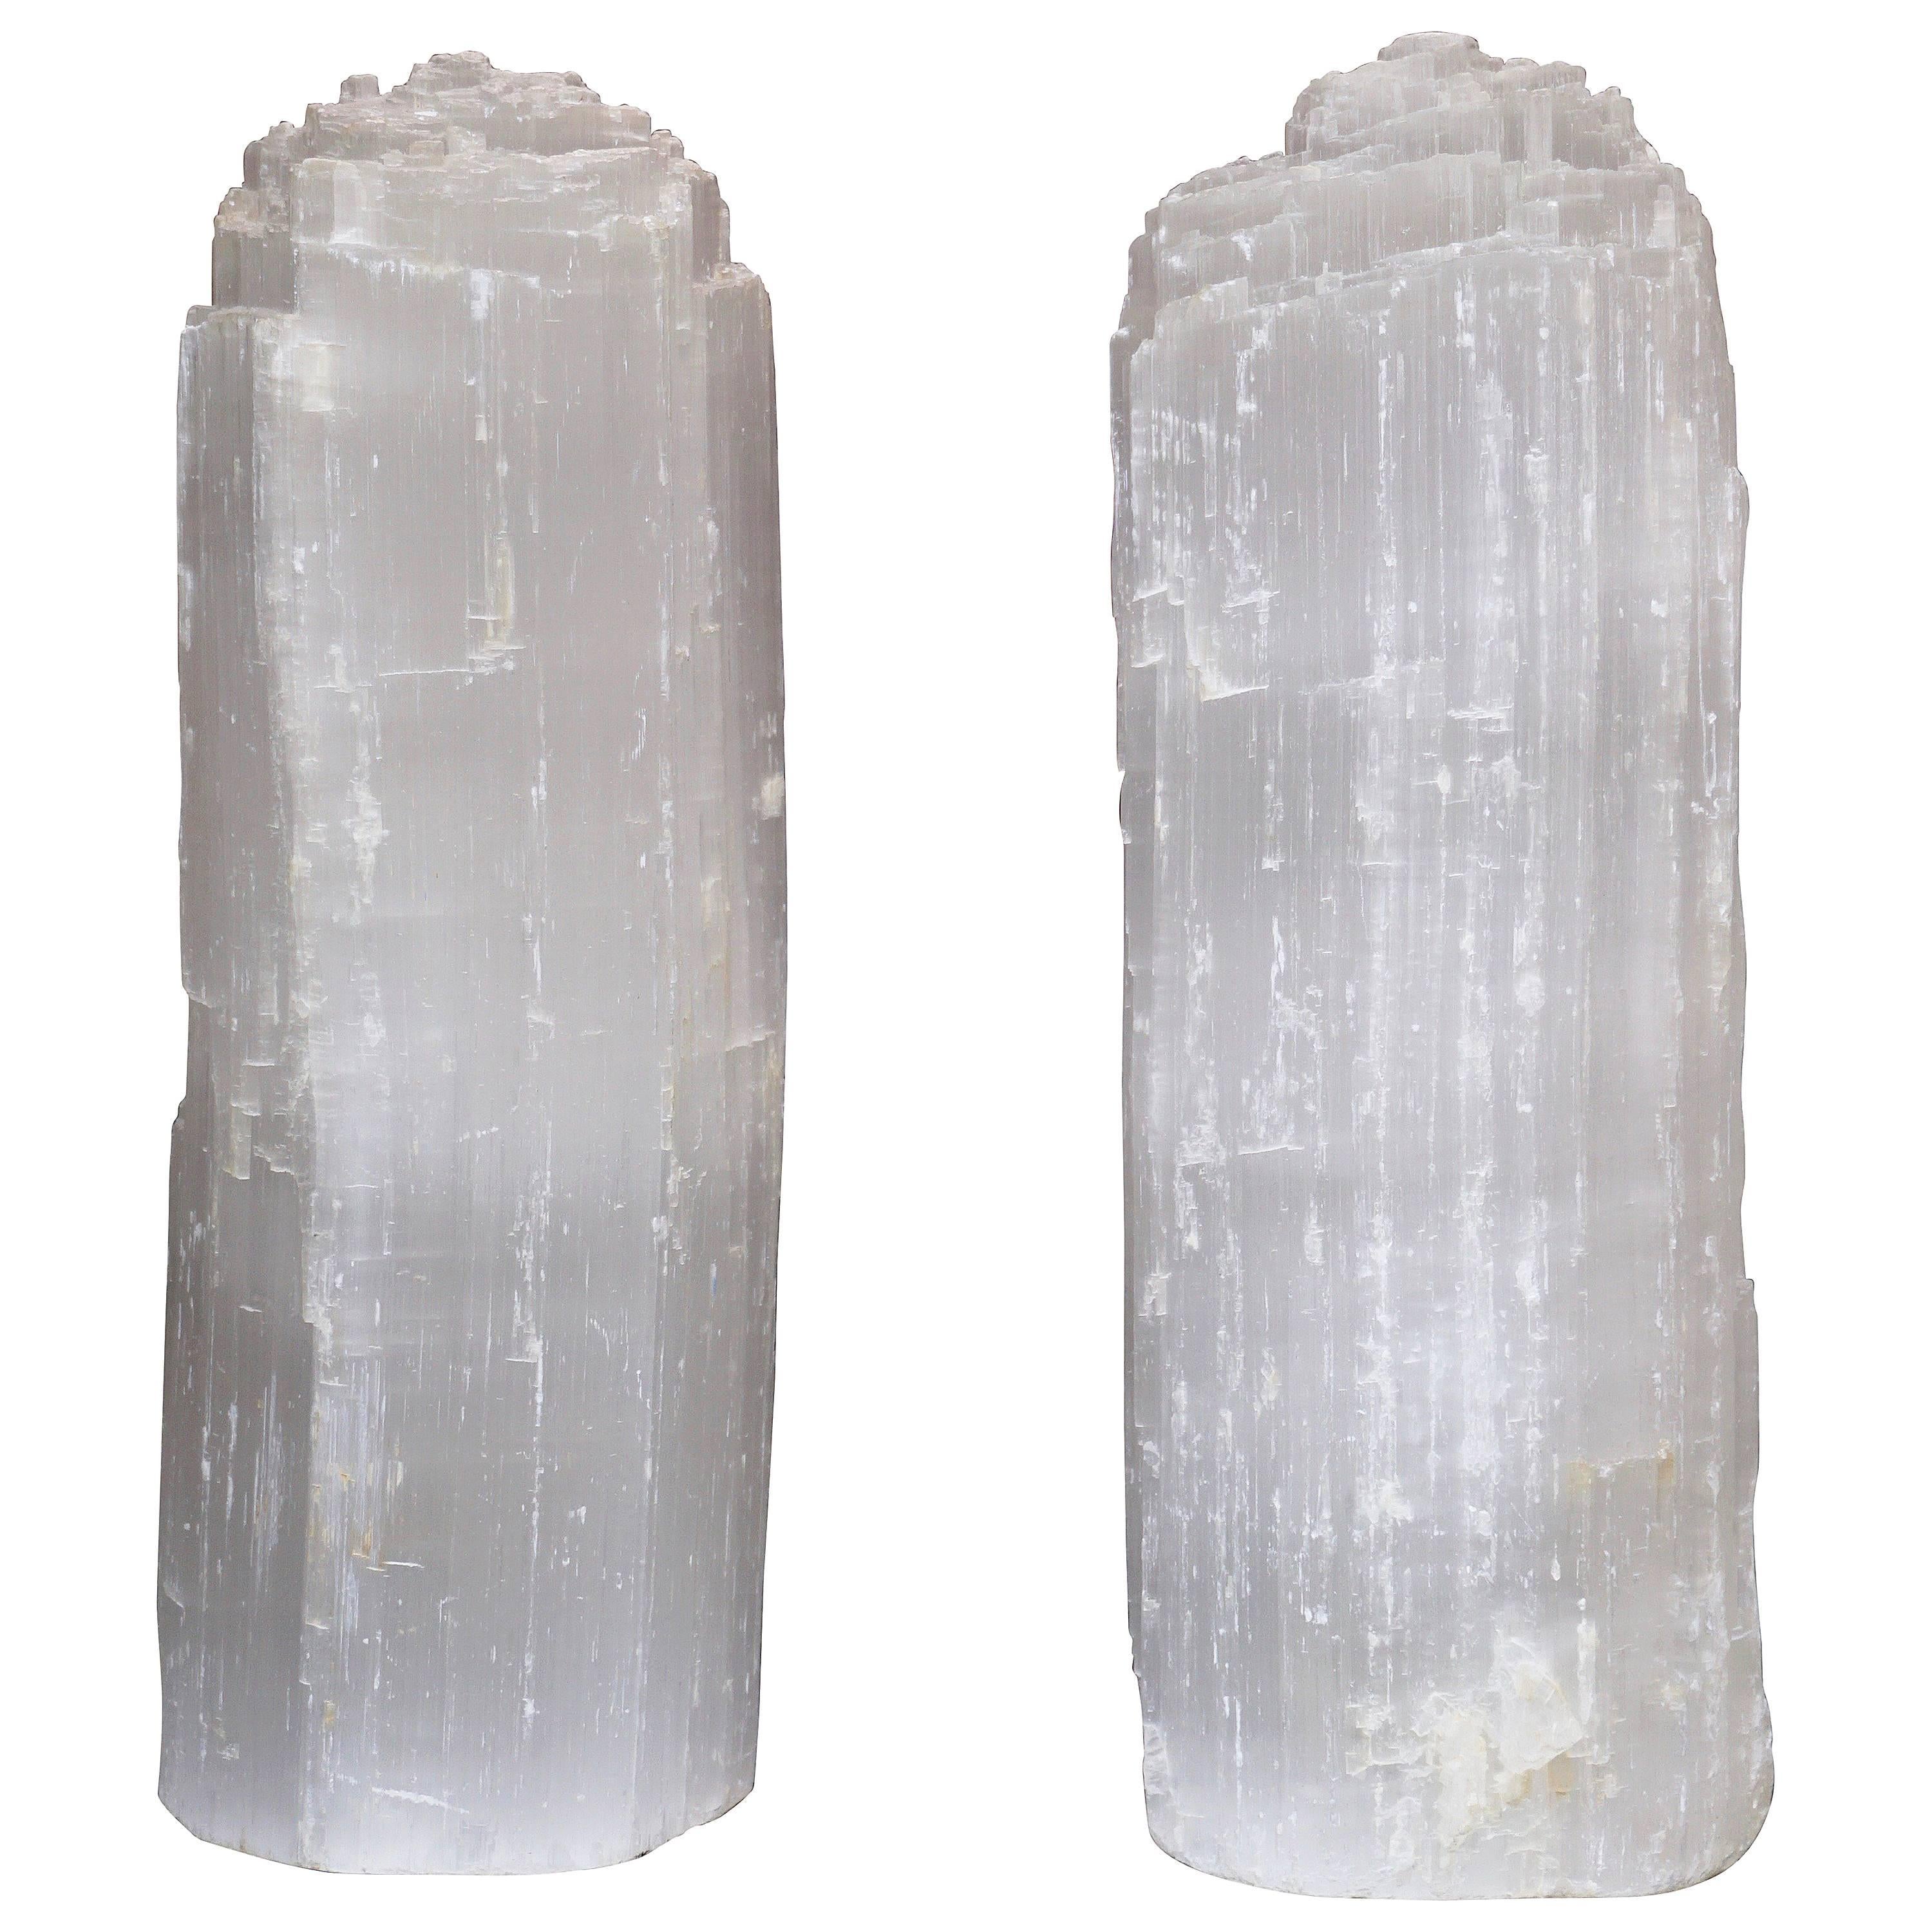 One Selenite Rock Crystal Quartz Table Lamp For Sale